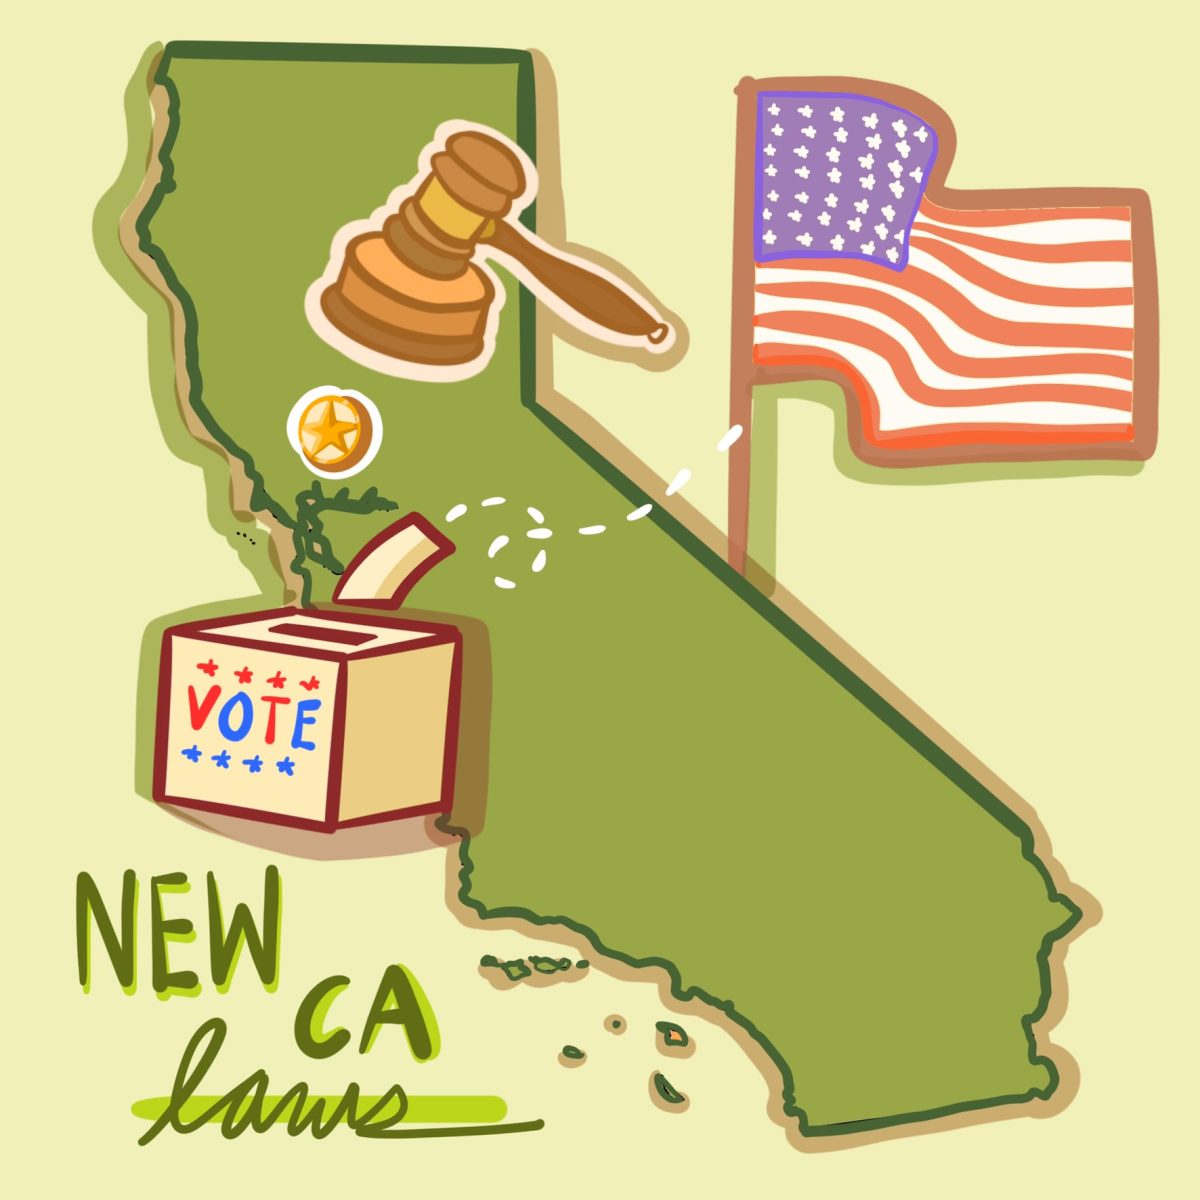 More Than Dreamers: New California Legislation